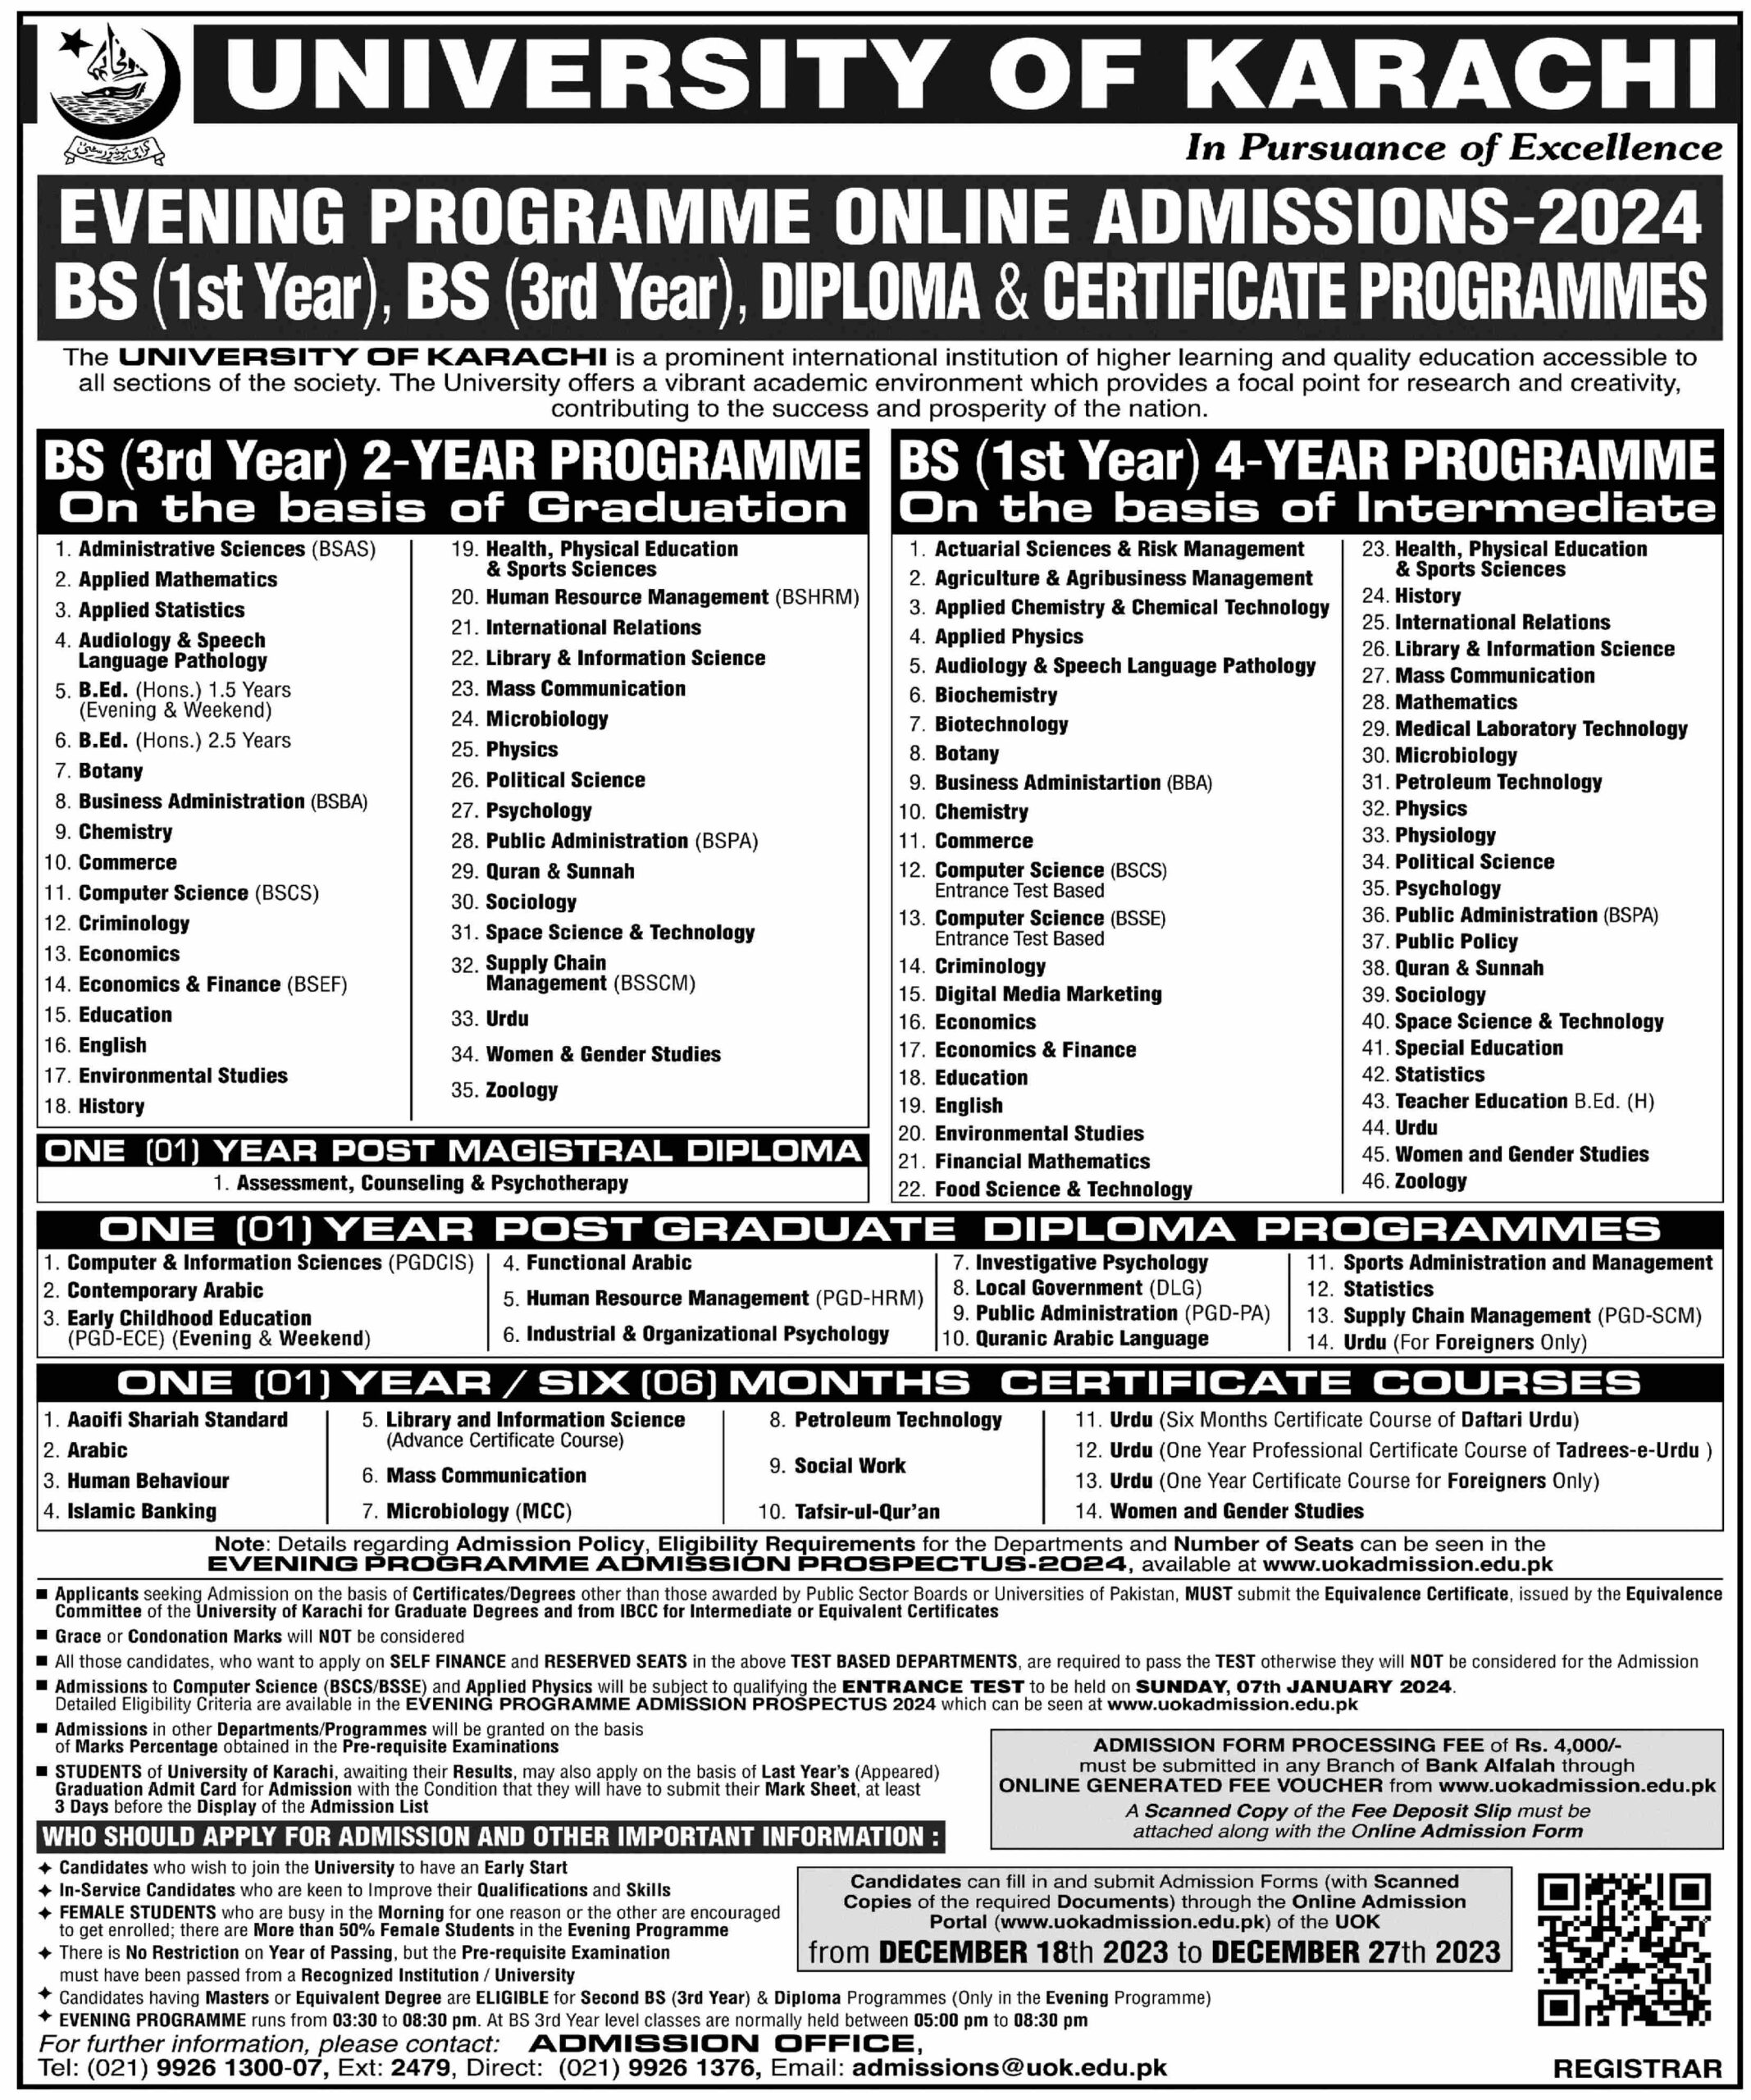 University of Karachi Evening Programme Online Admissions 2024